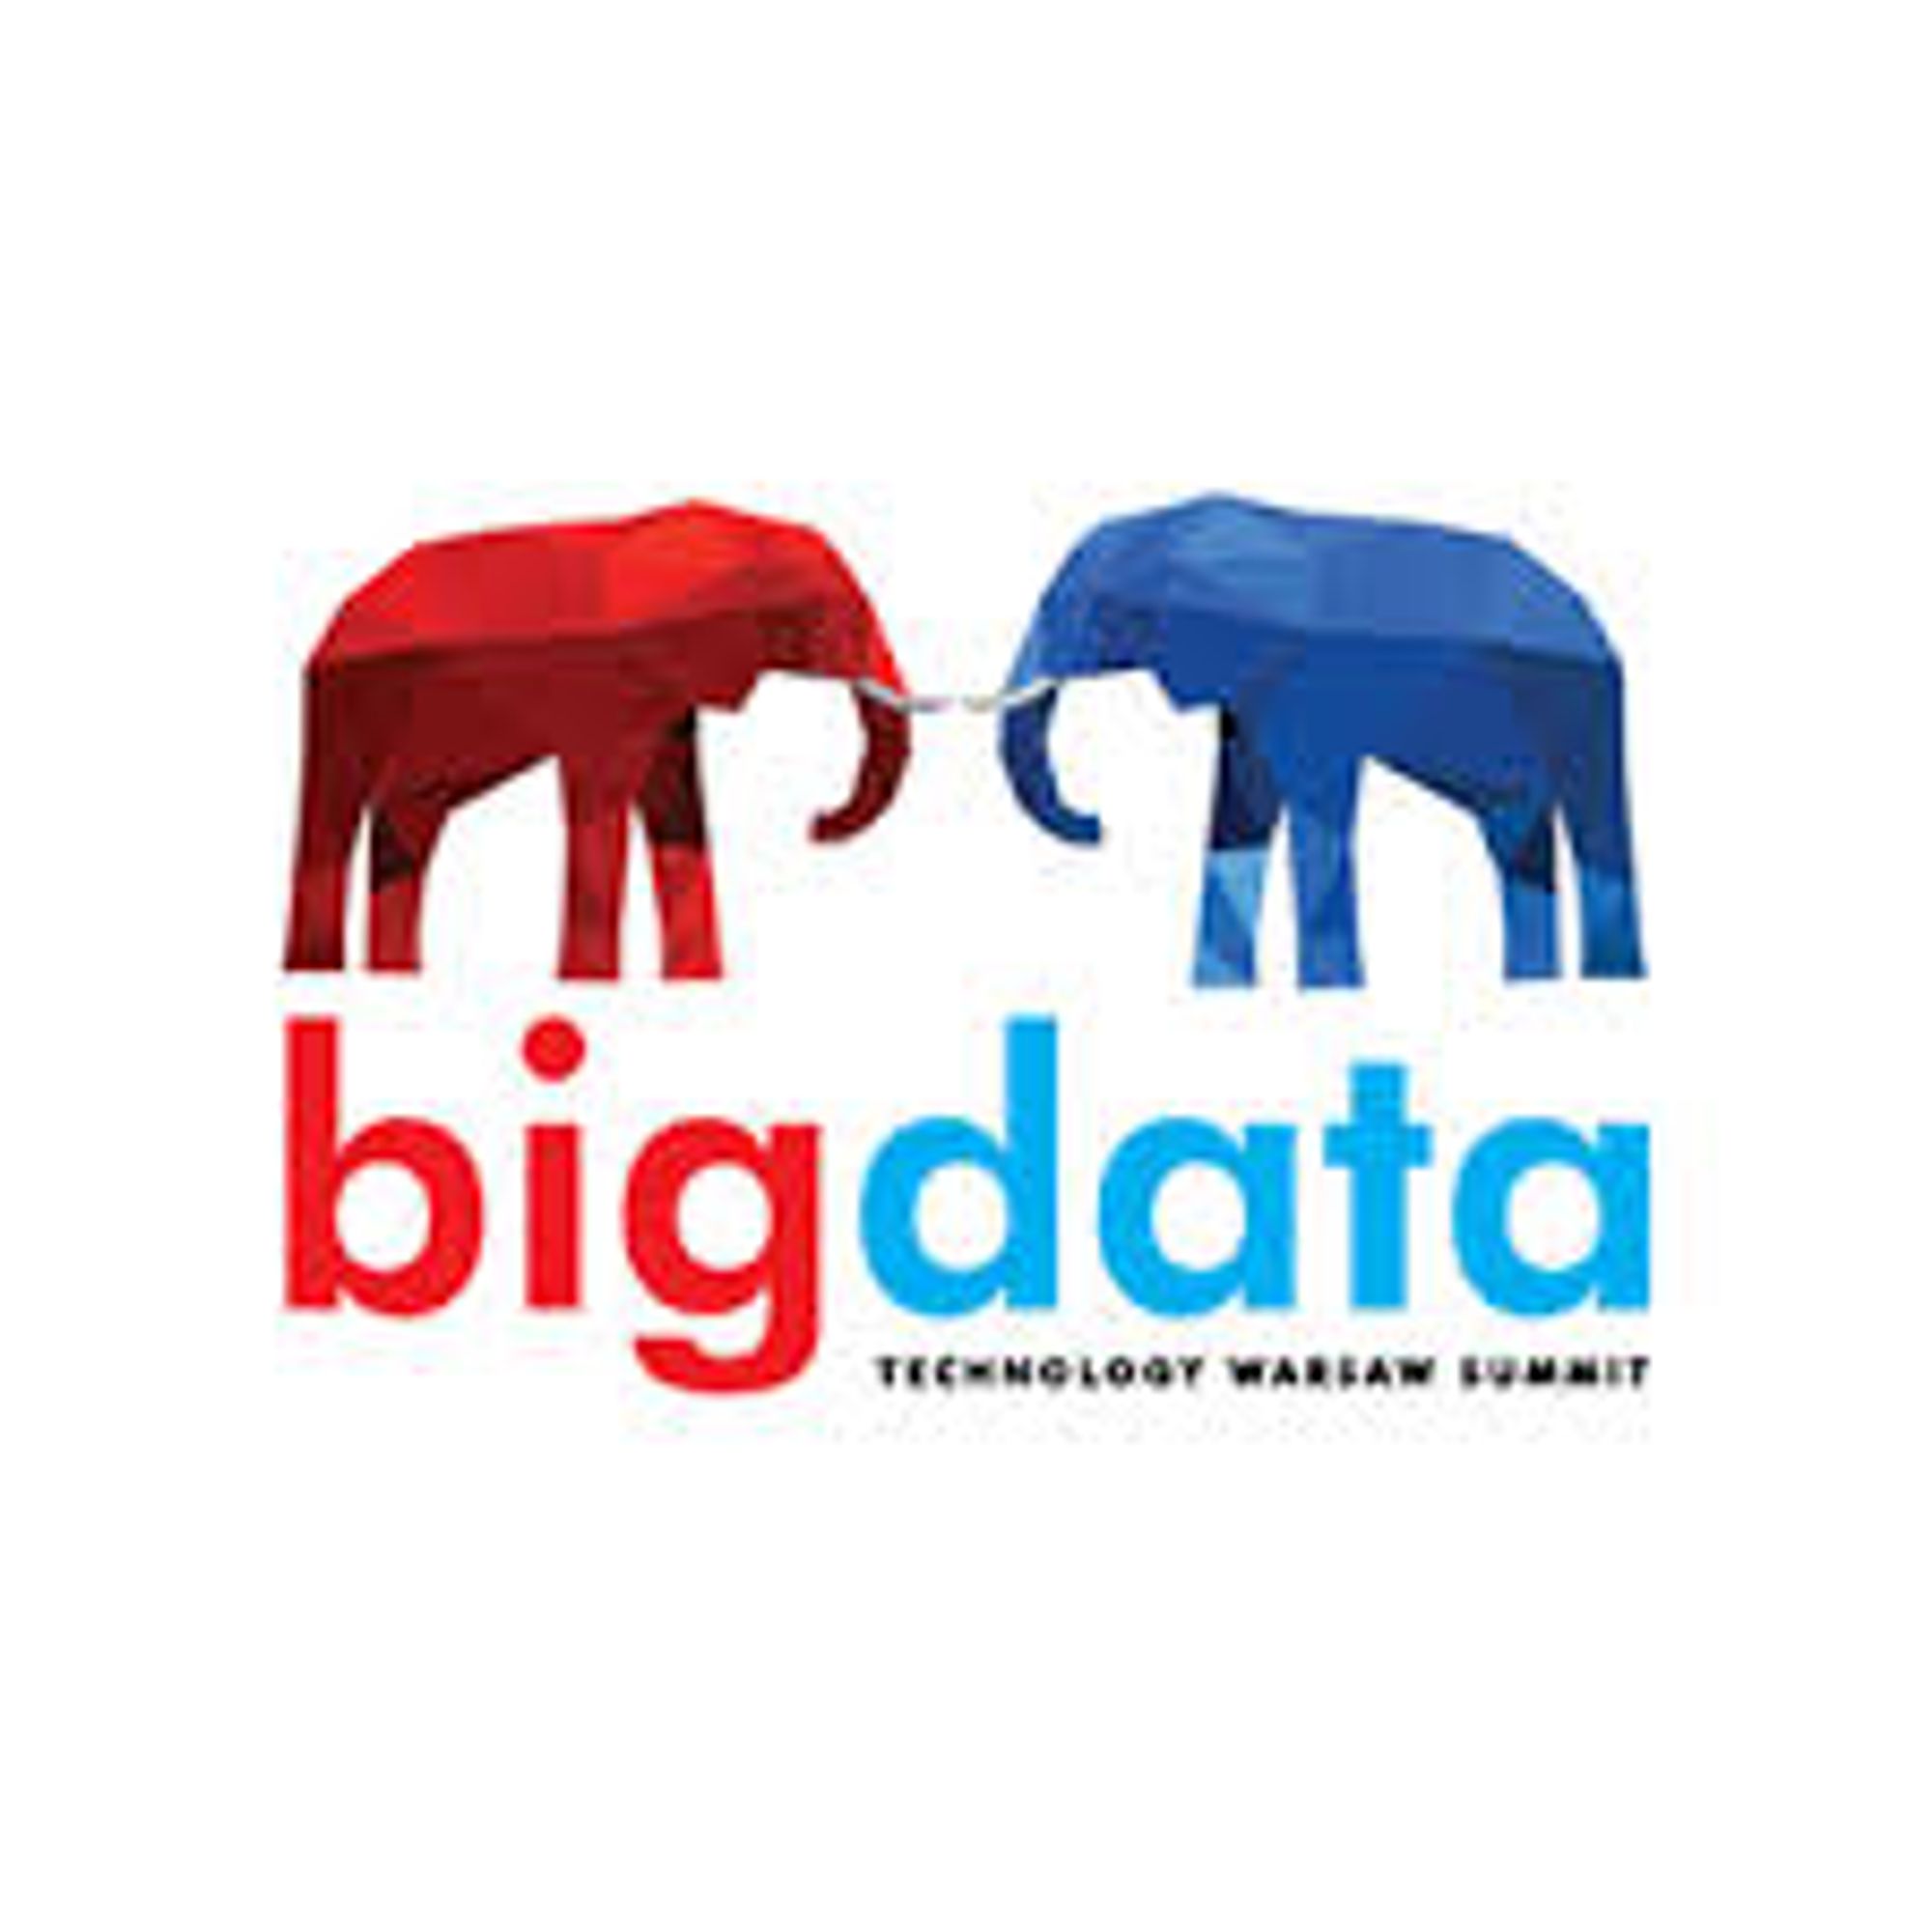 Big Data Tech Summit Warsaw Logo.jpeg